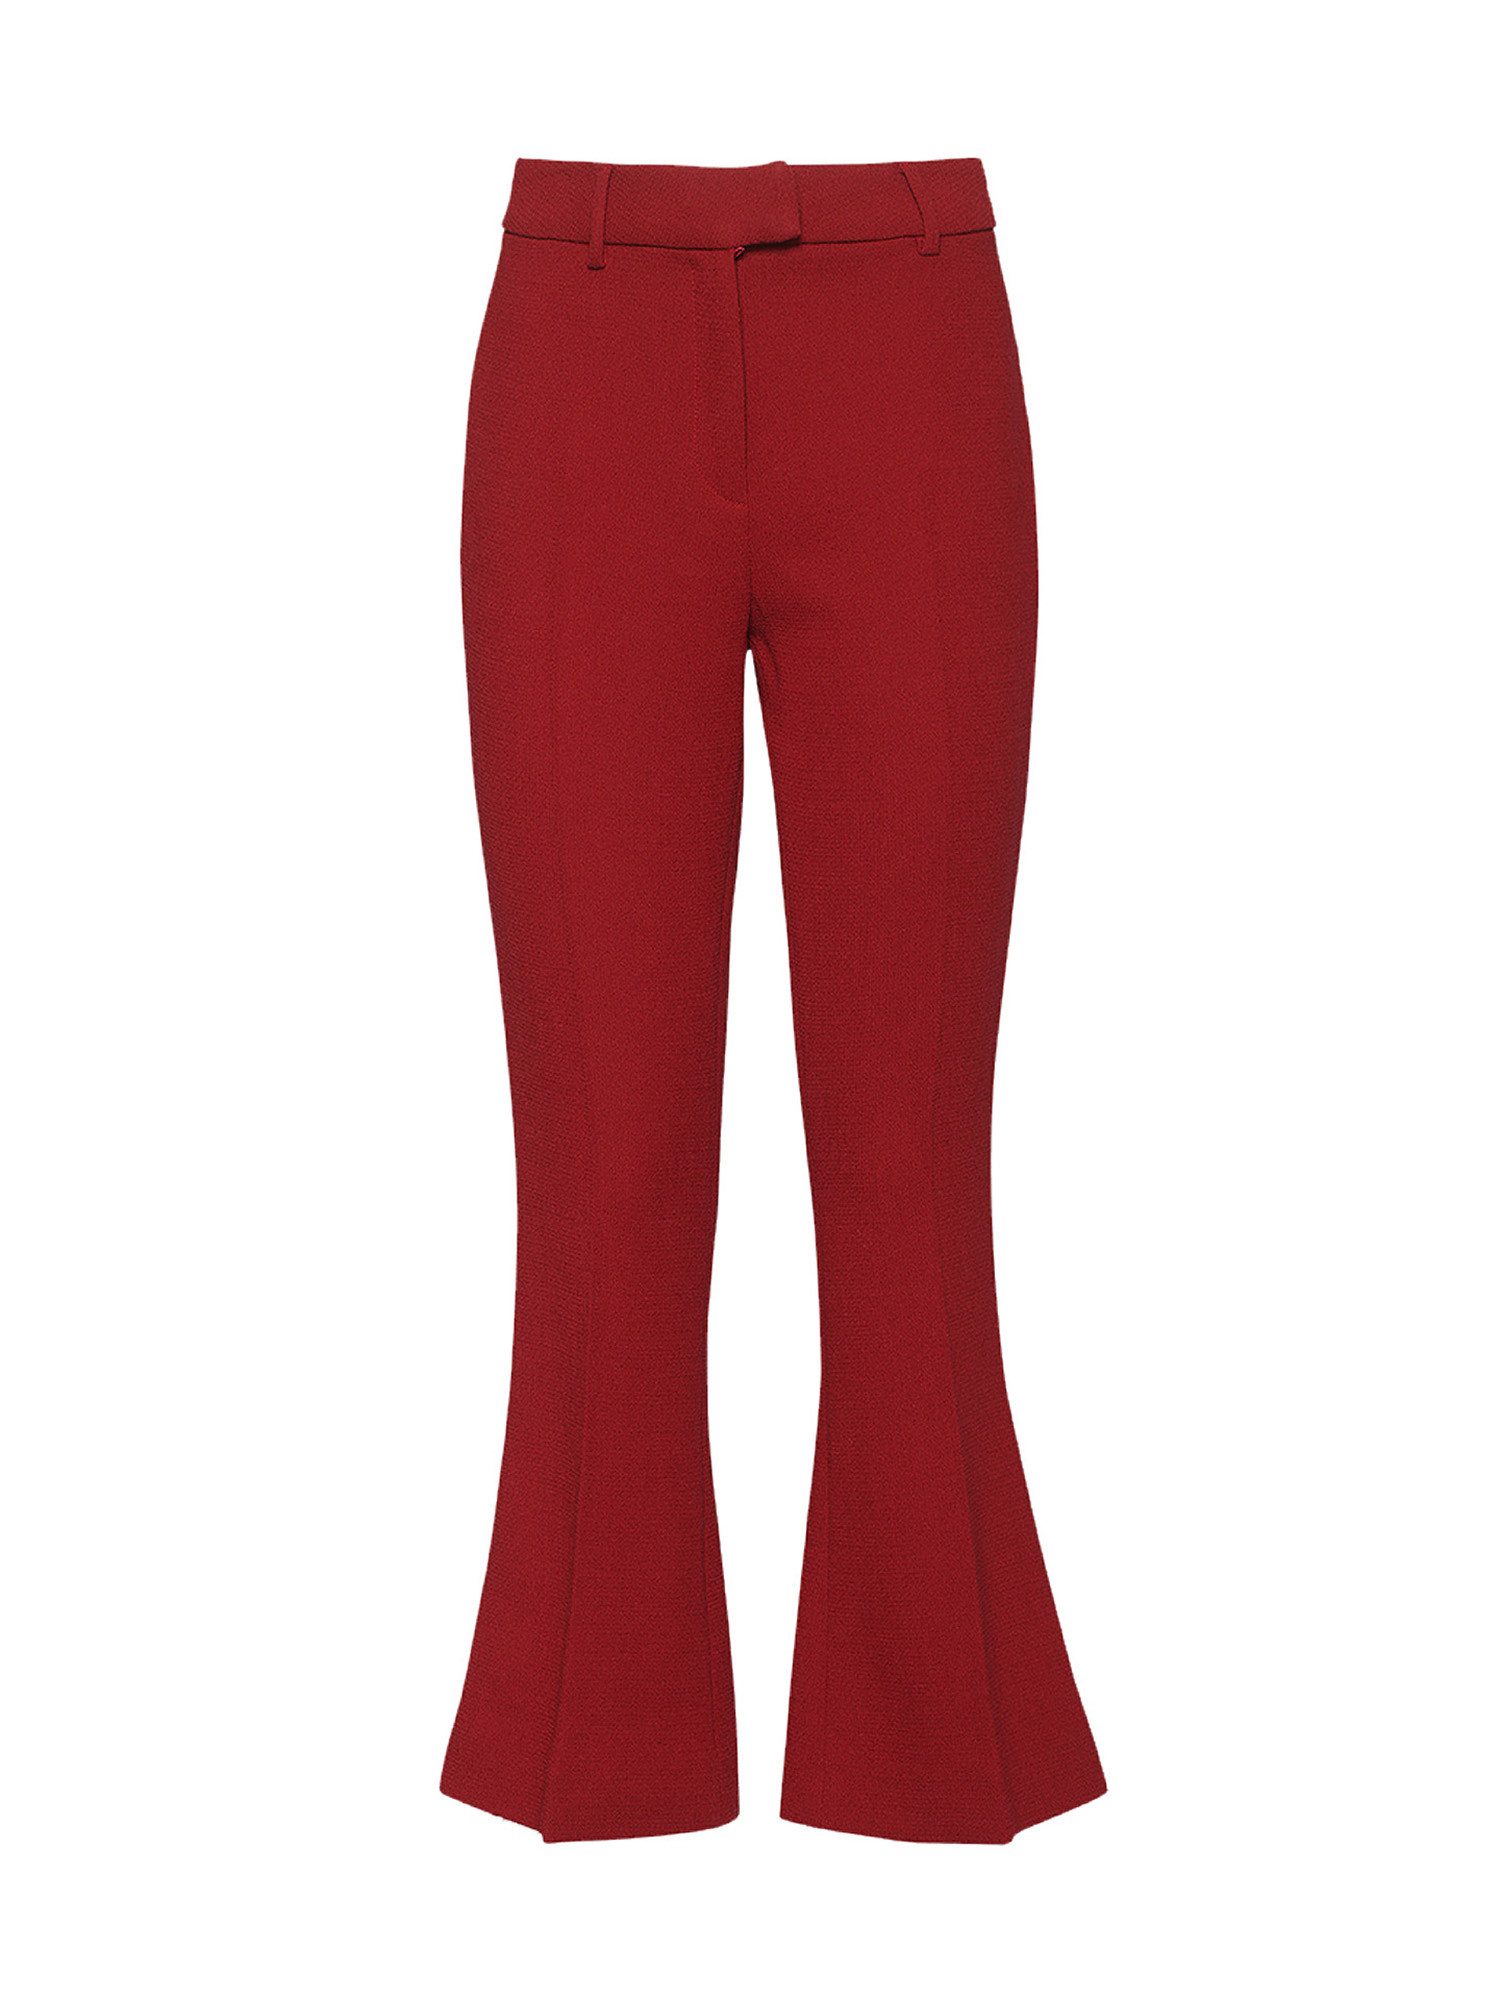 Pantalone donna, Rosso, large